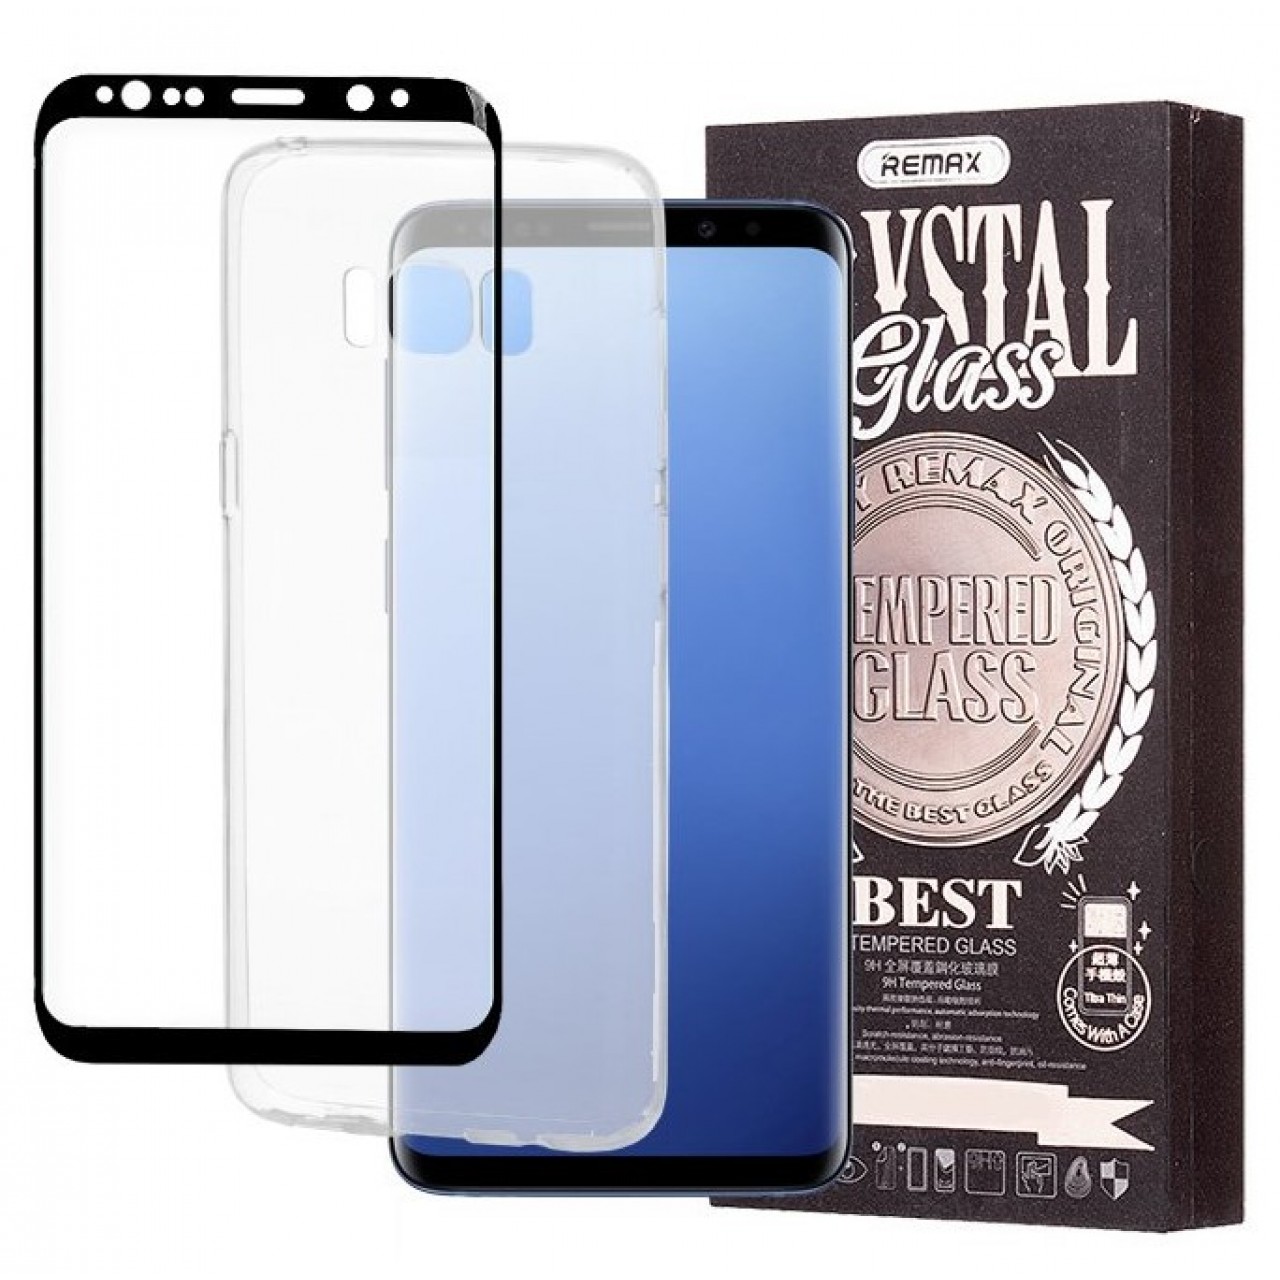 Tempered Glass για Samsung Galaxy S8 Plus ( G955 ) 9H Full Cover 3D Curved Edge Μαύρο + Θήκη Σιλικόνης TPU Ultra Slim Διάφανη - 4054 - Remax